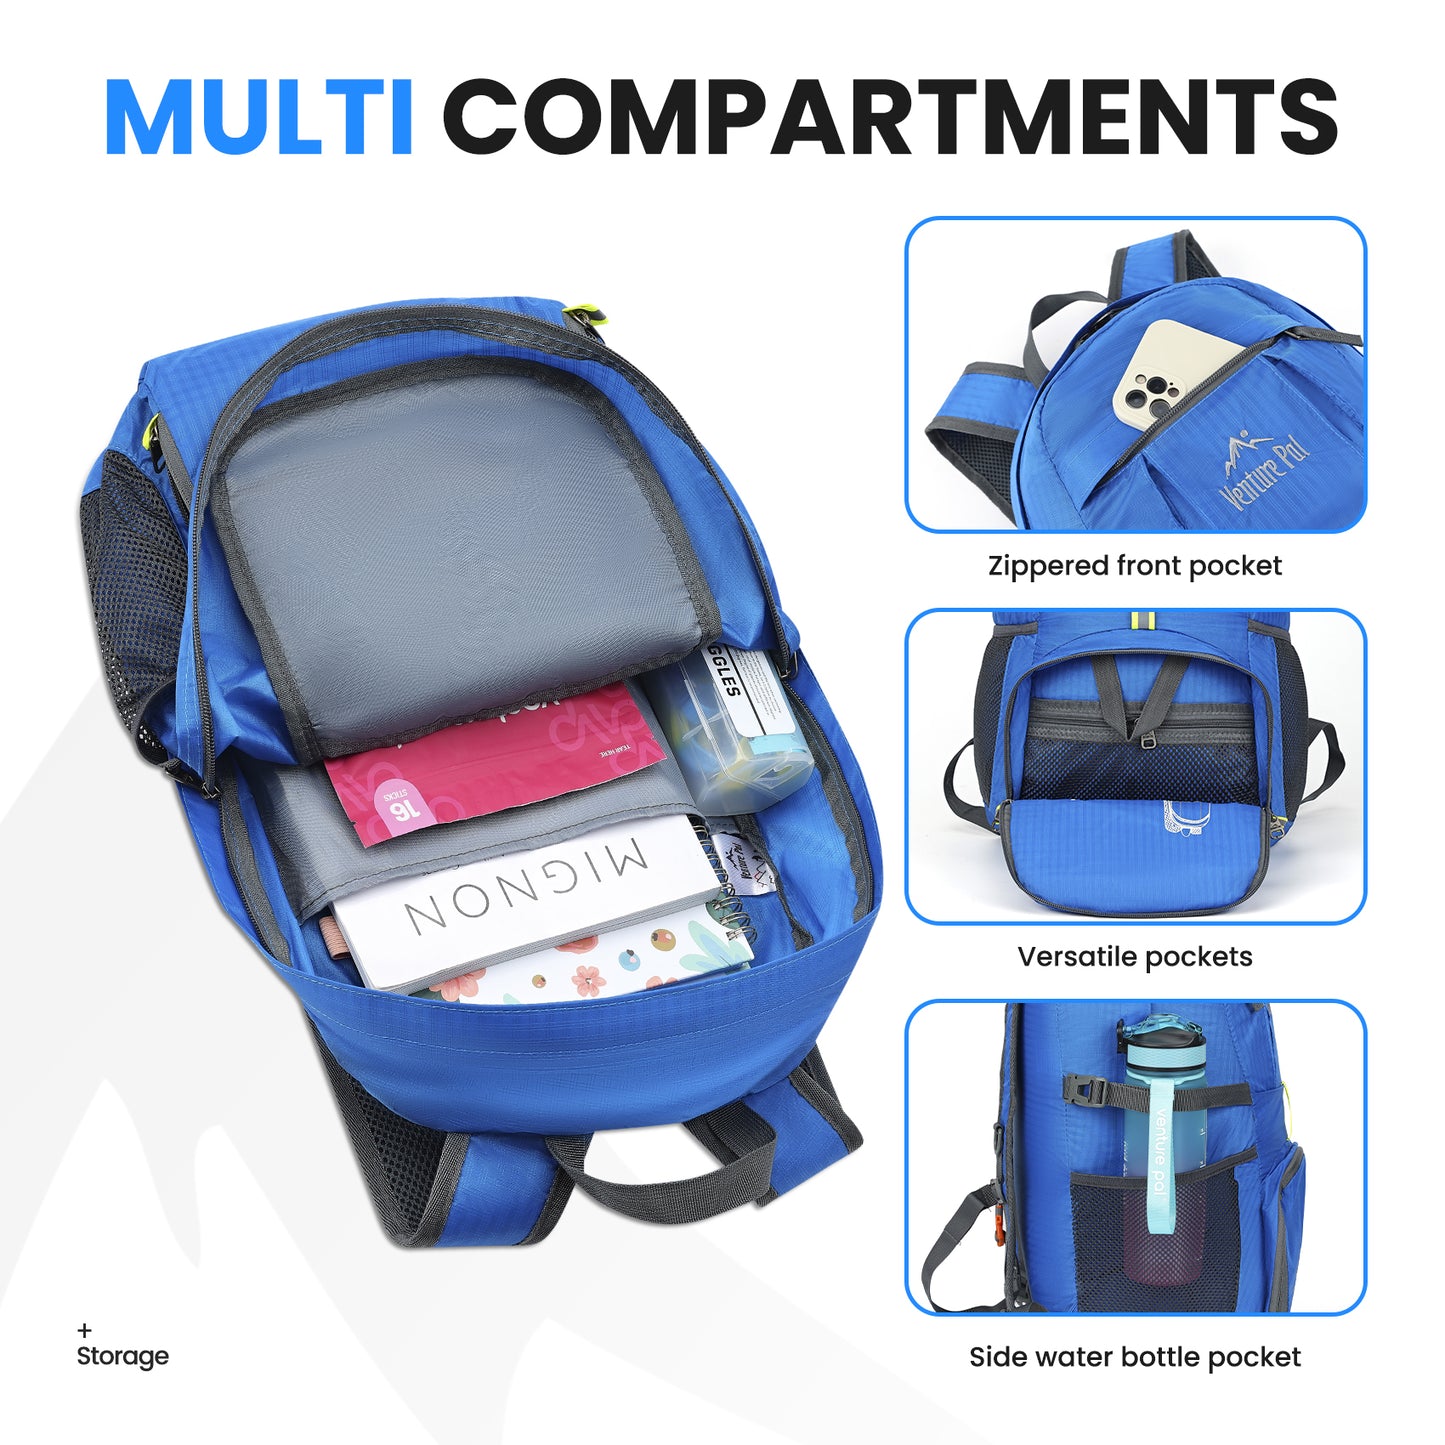 Venture Pal Royal Blue 35L Double-Layer Bottom and Shoulder Straps Sports Backpack